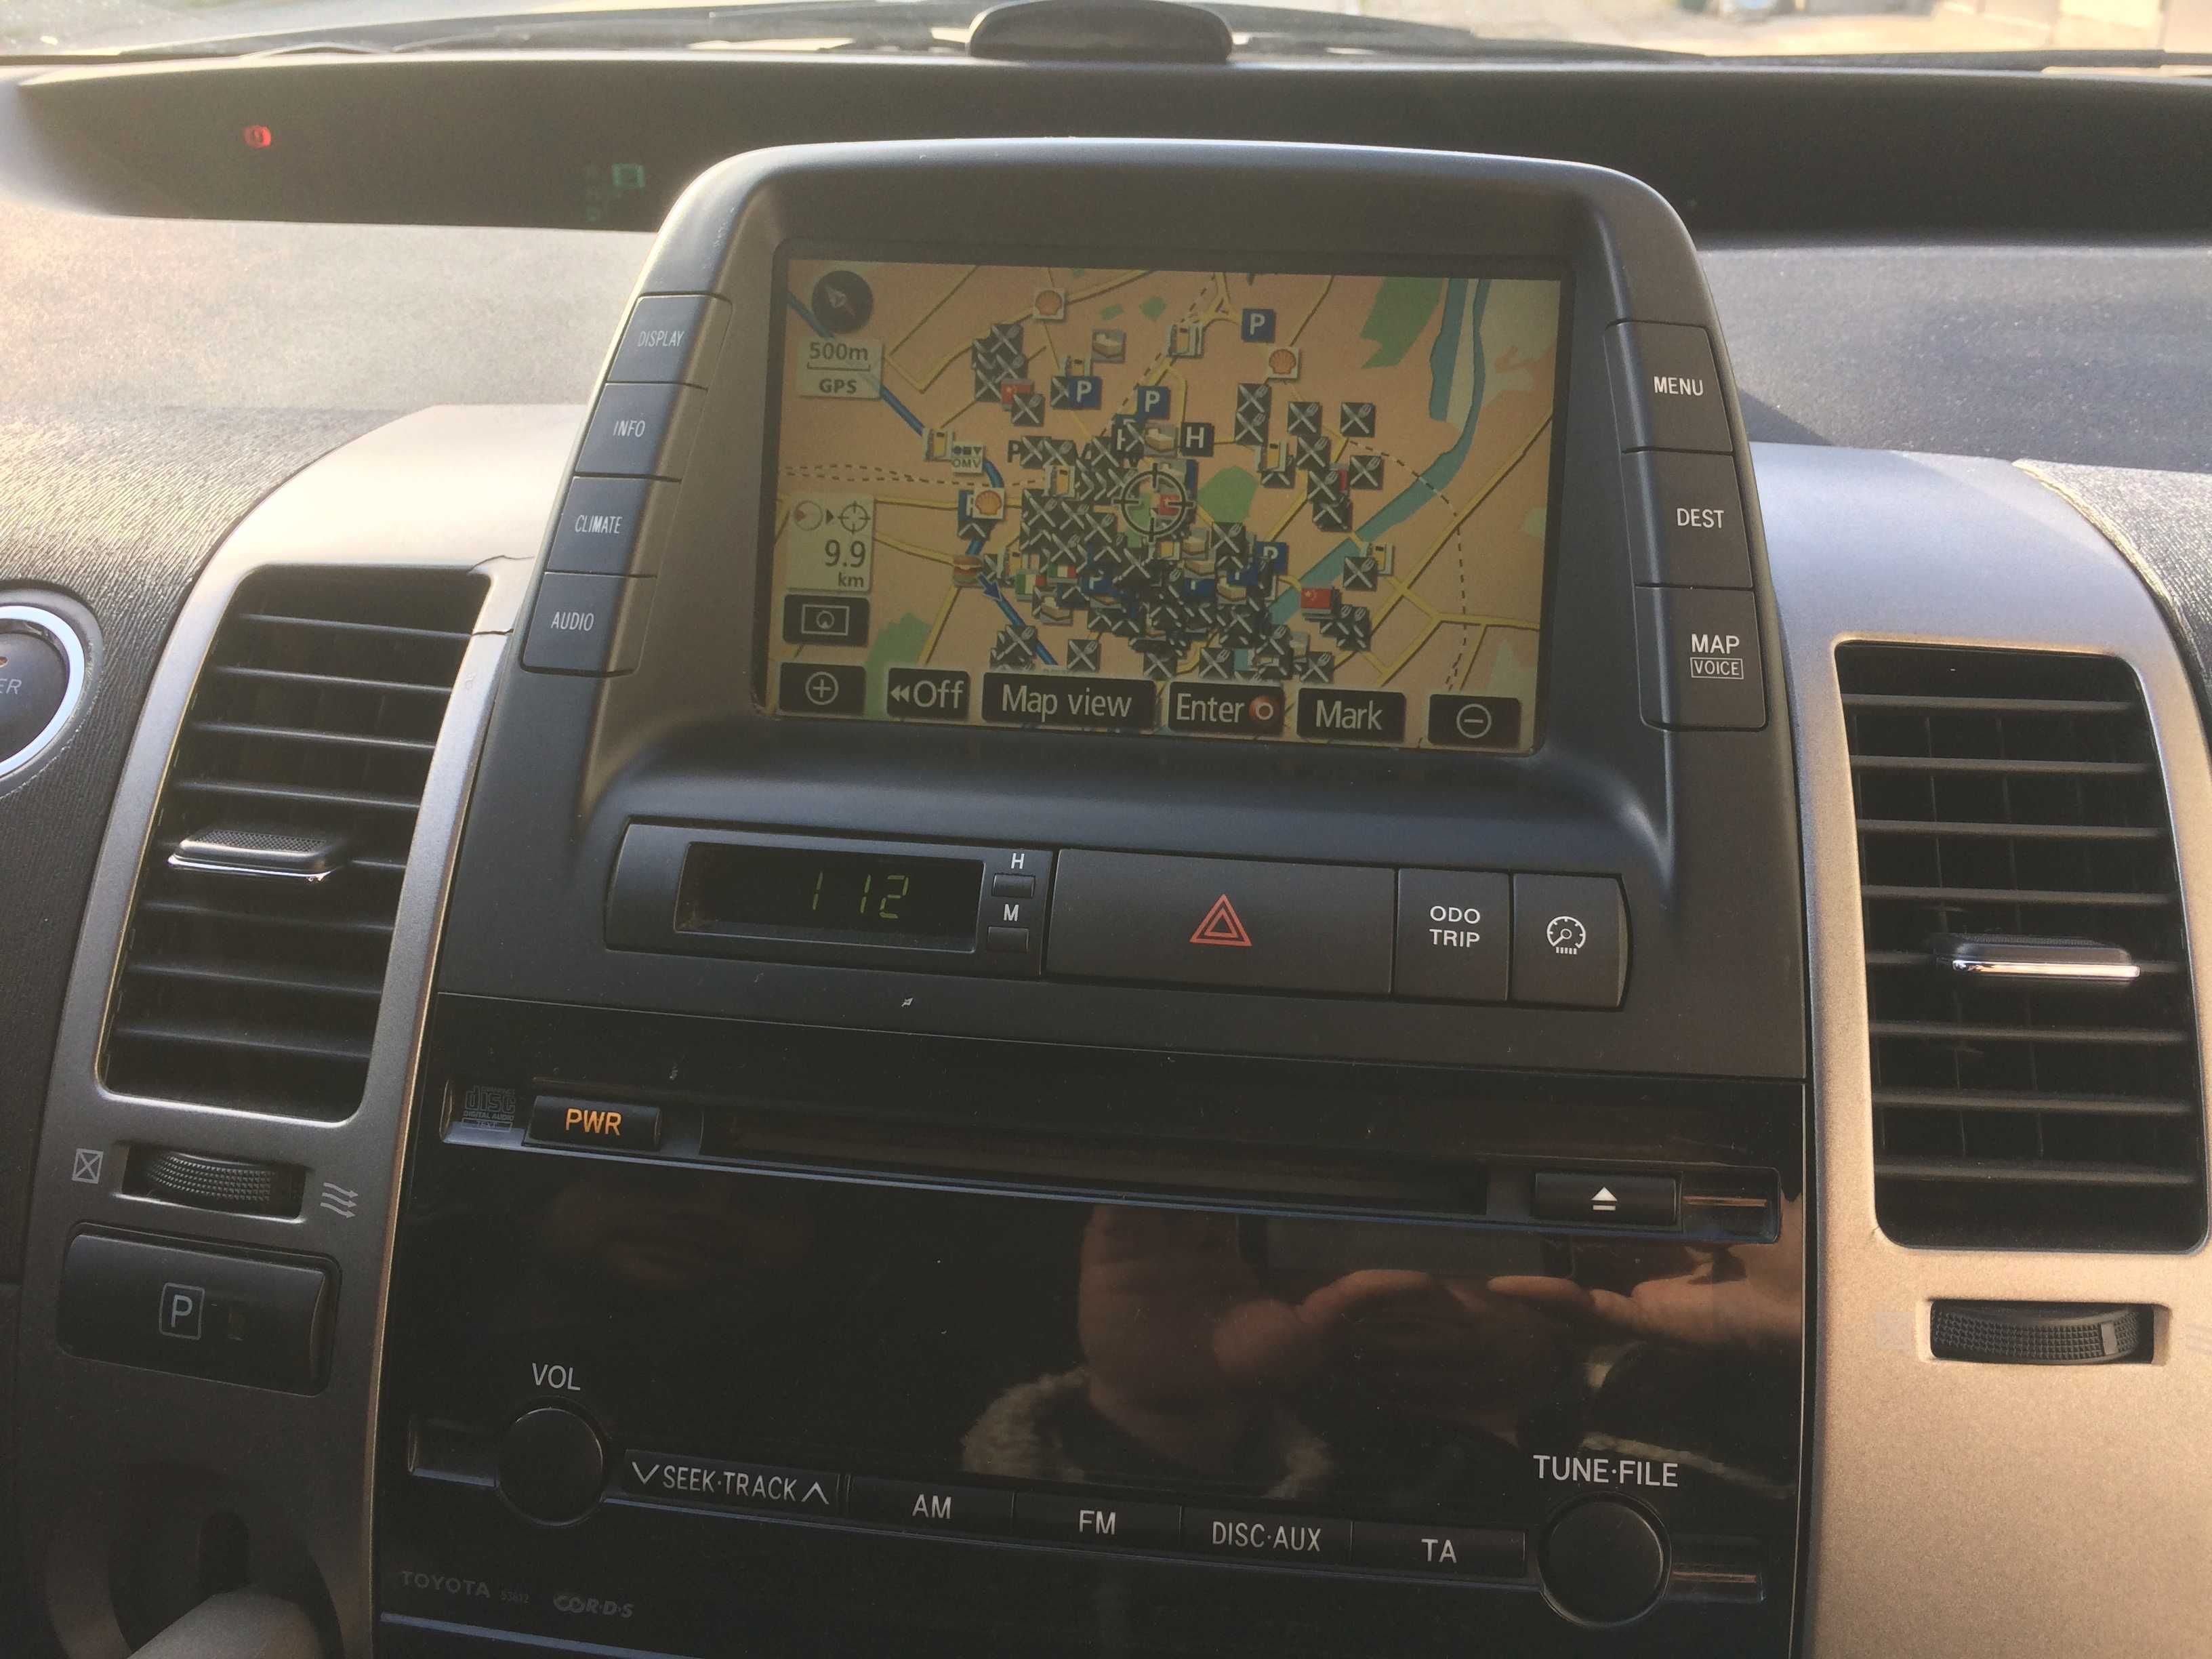 Диск за навигация Lexus Toyota лексус тойота sd card disk